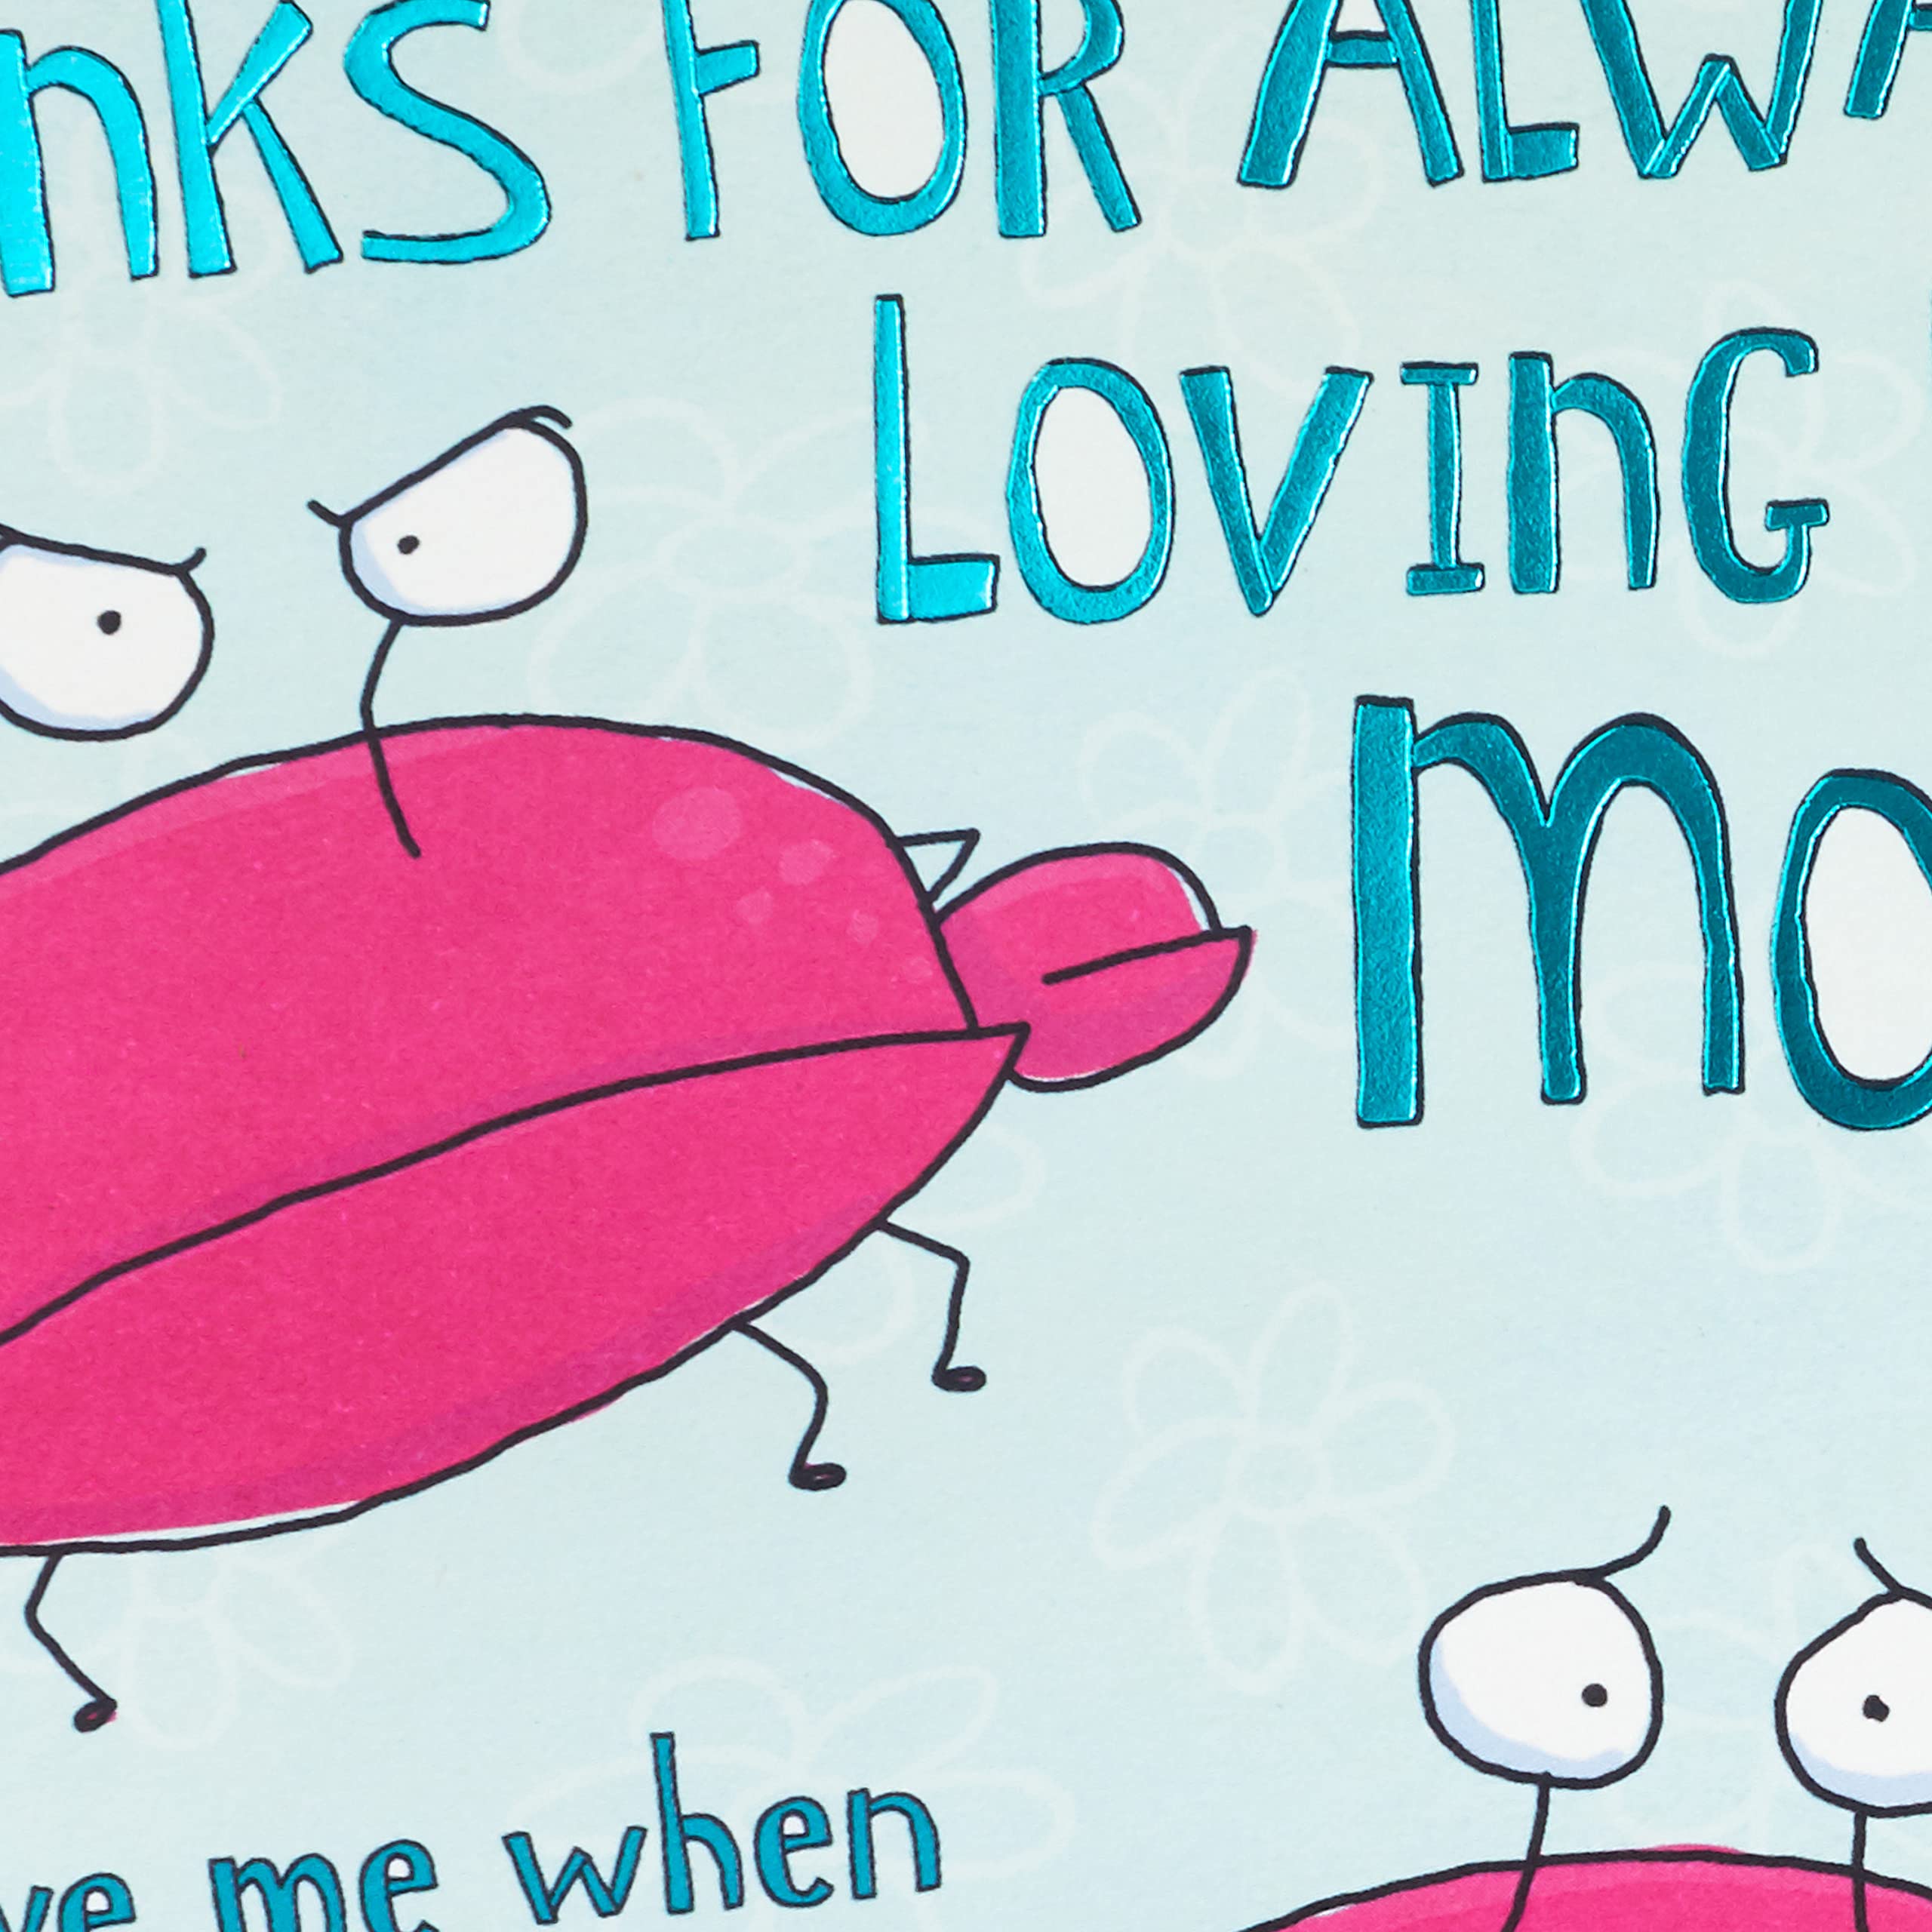 Hallmark Birthday Card for Mom (Pop Up Crab)